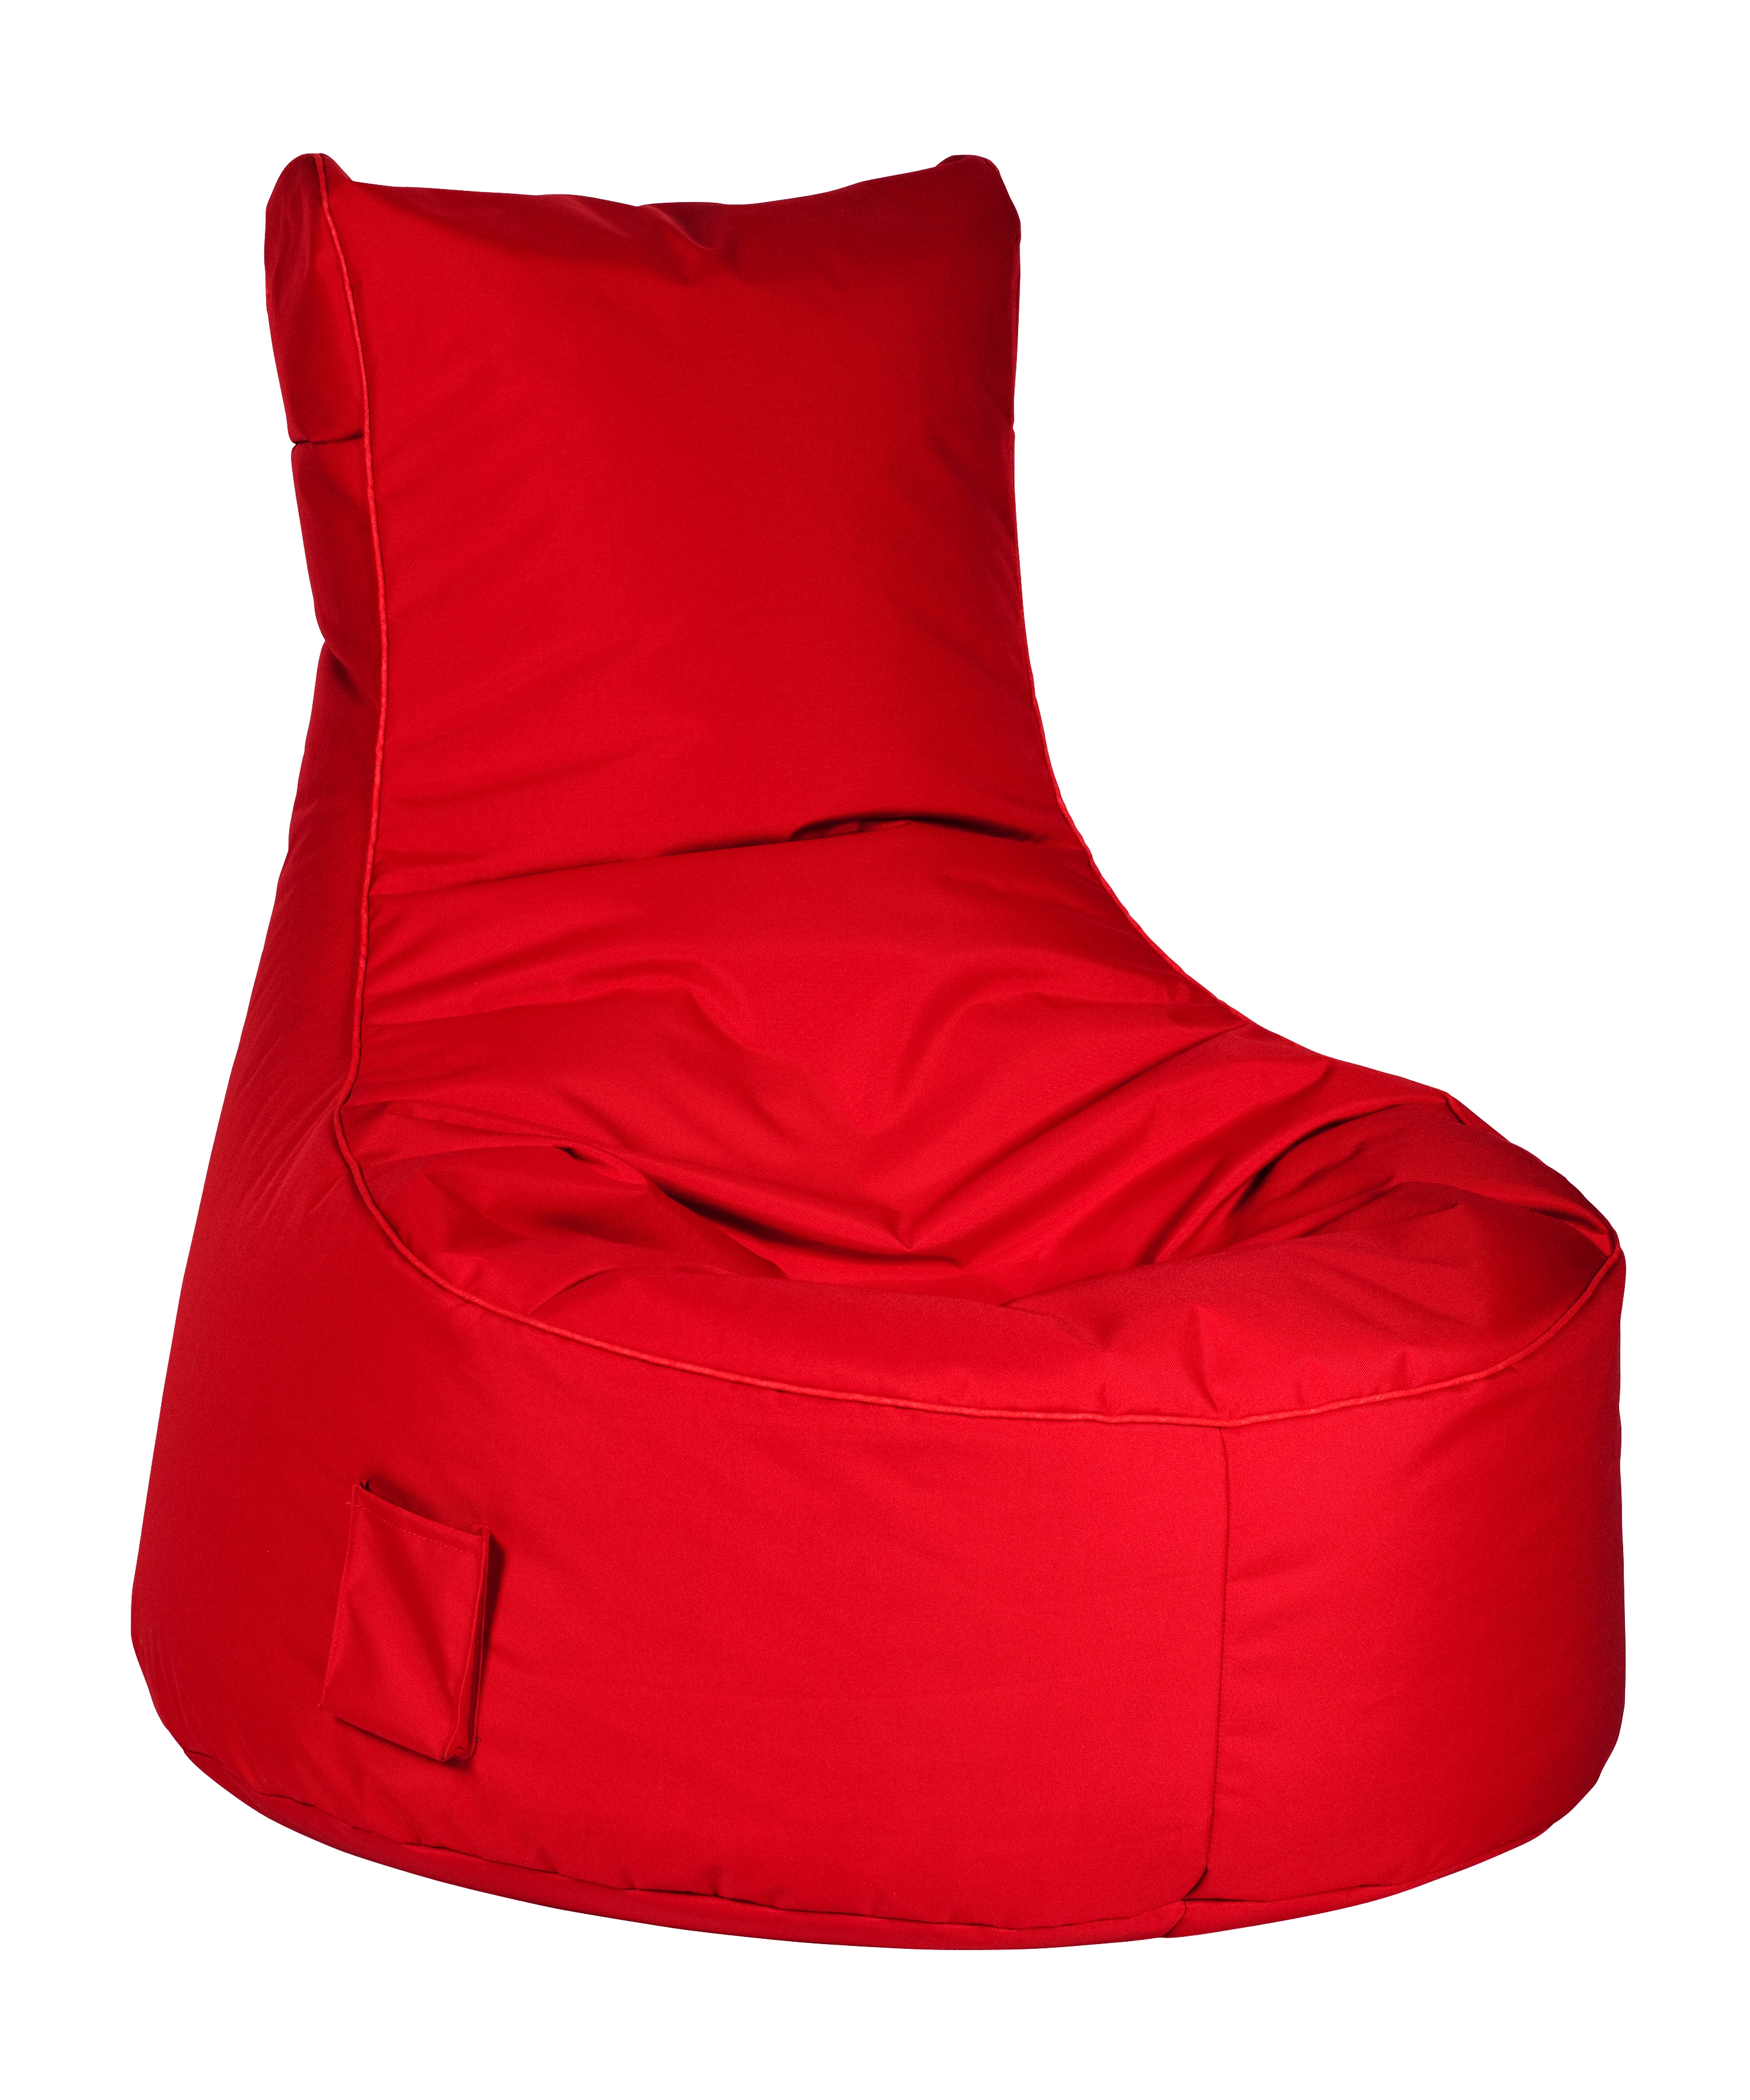 Sitting Point Sitzsack Swing Scuba 300 l Rot kaufen bei OBI